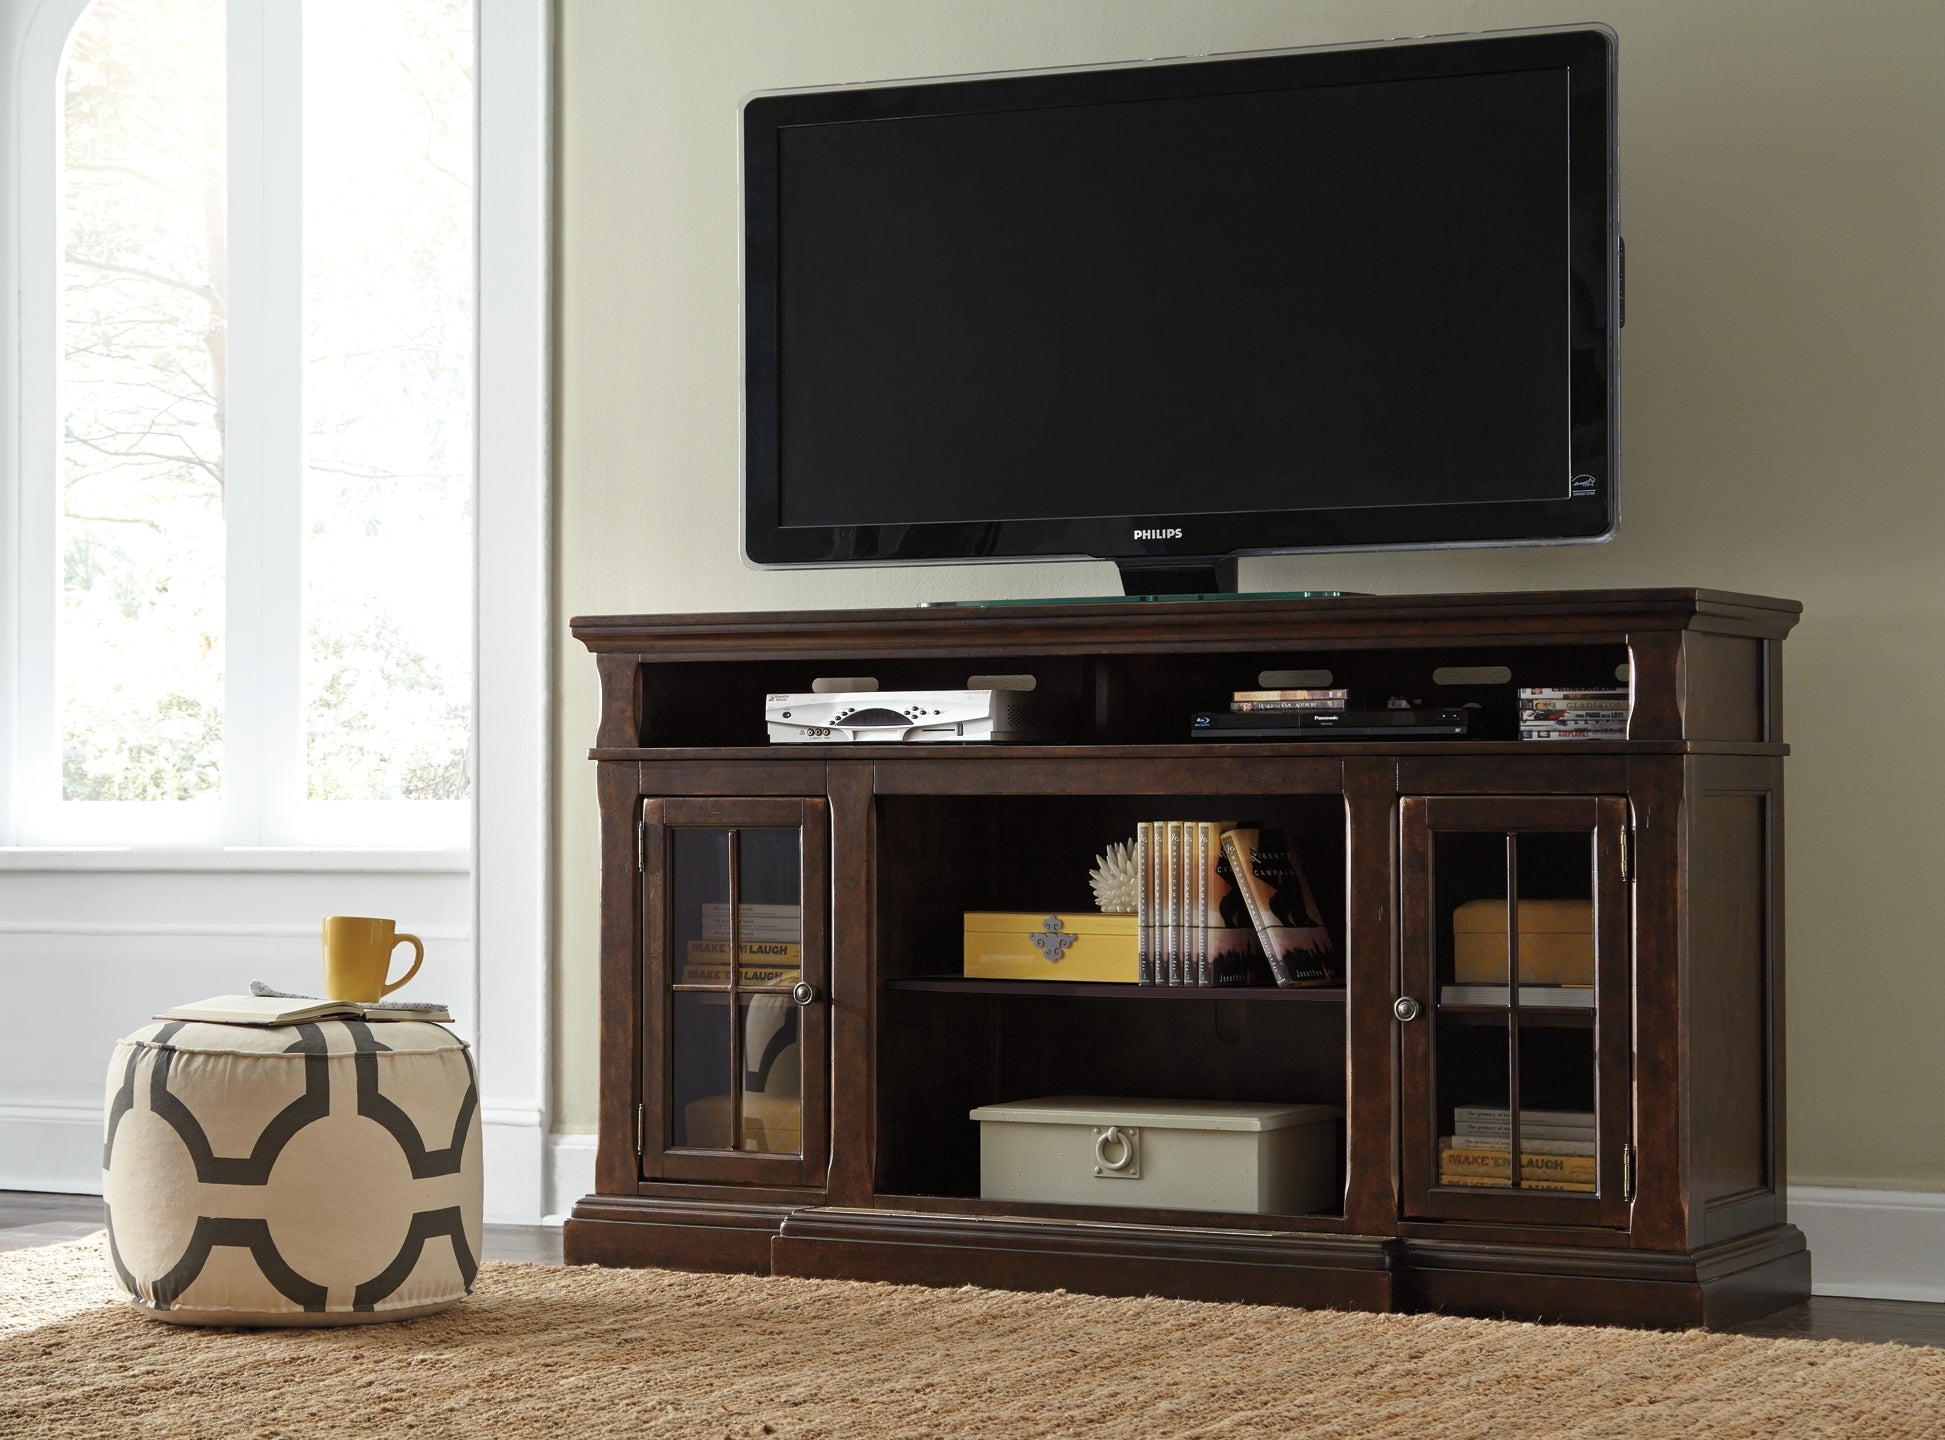 Roddinton XL TV Stand w/Fireplace Option Smyrna Furniture Outlet